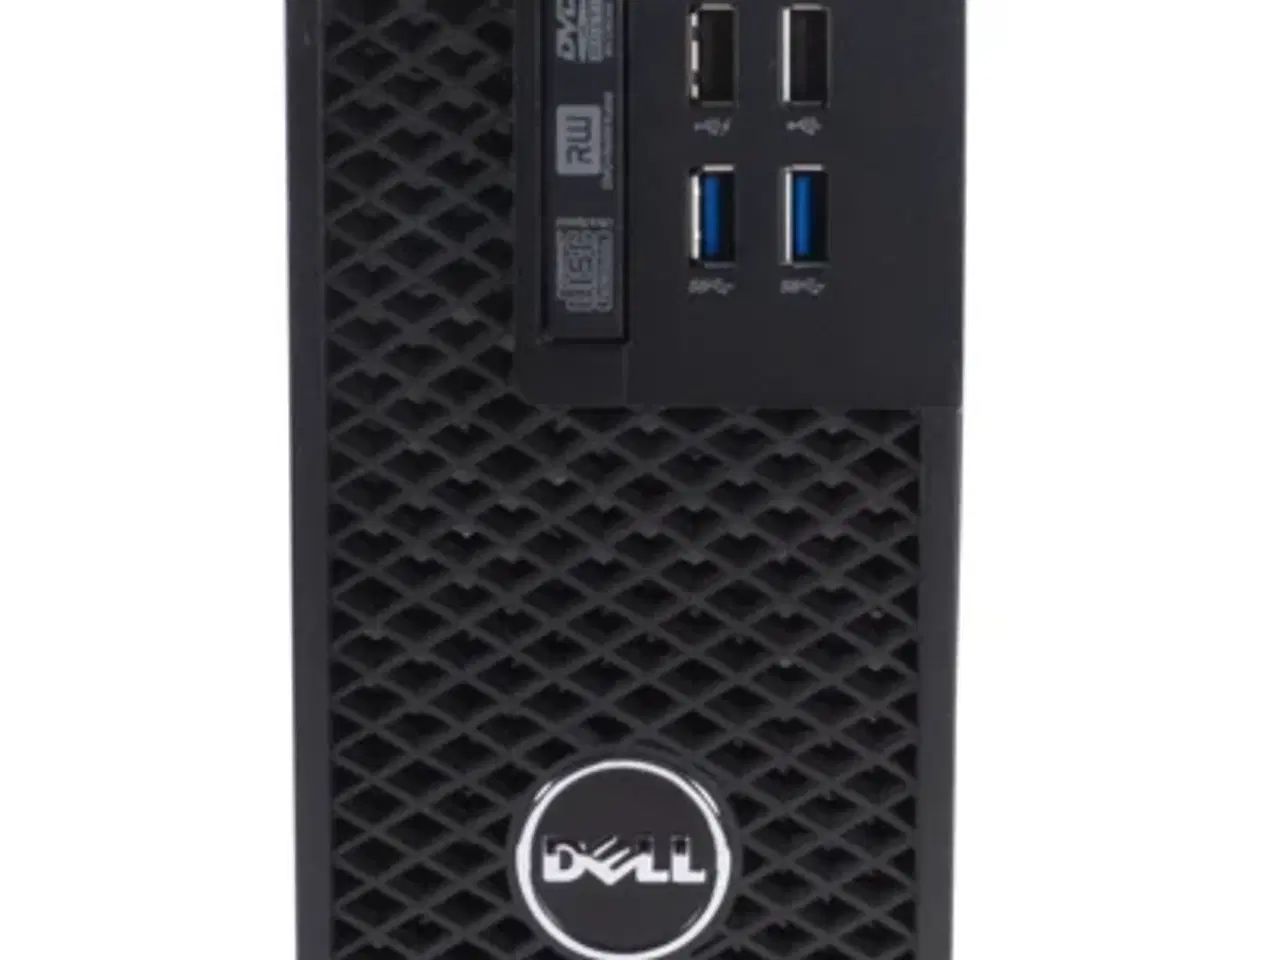 Billede 1 - Dell Precision tower 3420| I3-6100 3.70GHZ / 8GB RAM / 256GB SSD | Grade A